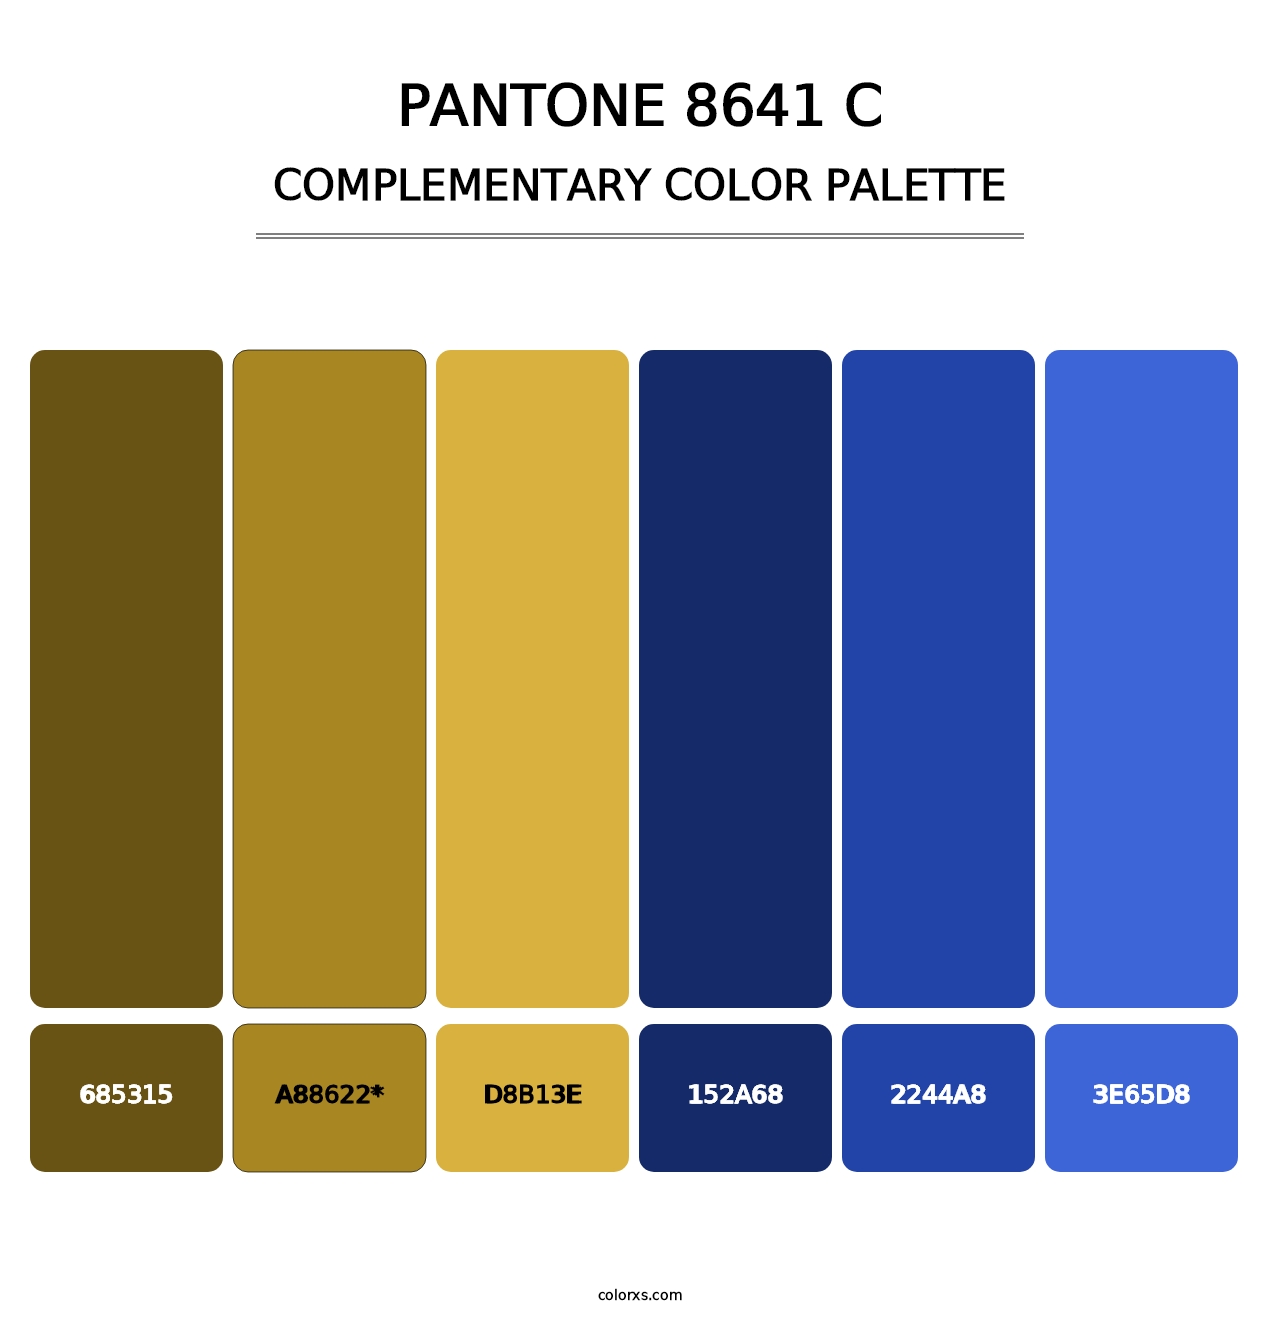 PANTONE 8641 C - Complementary Color Palette